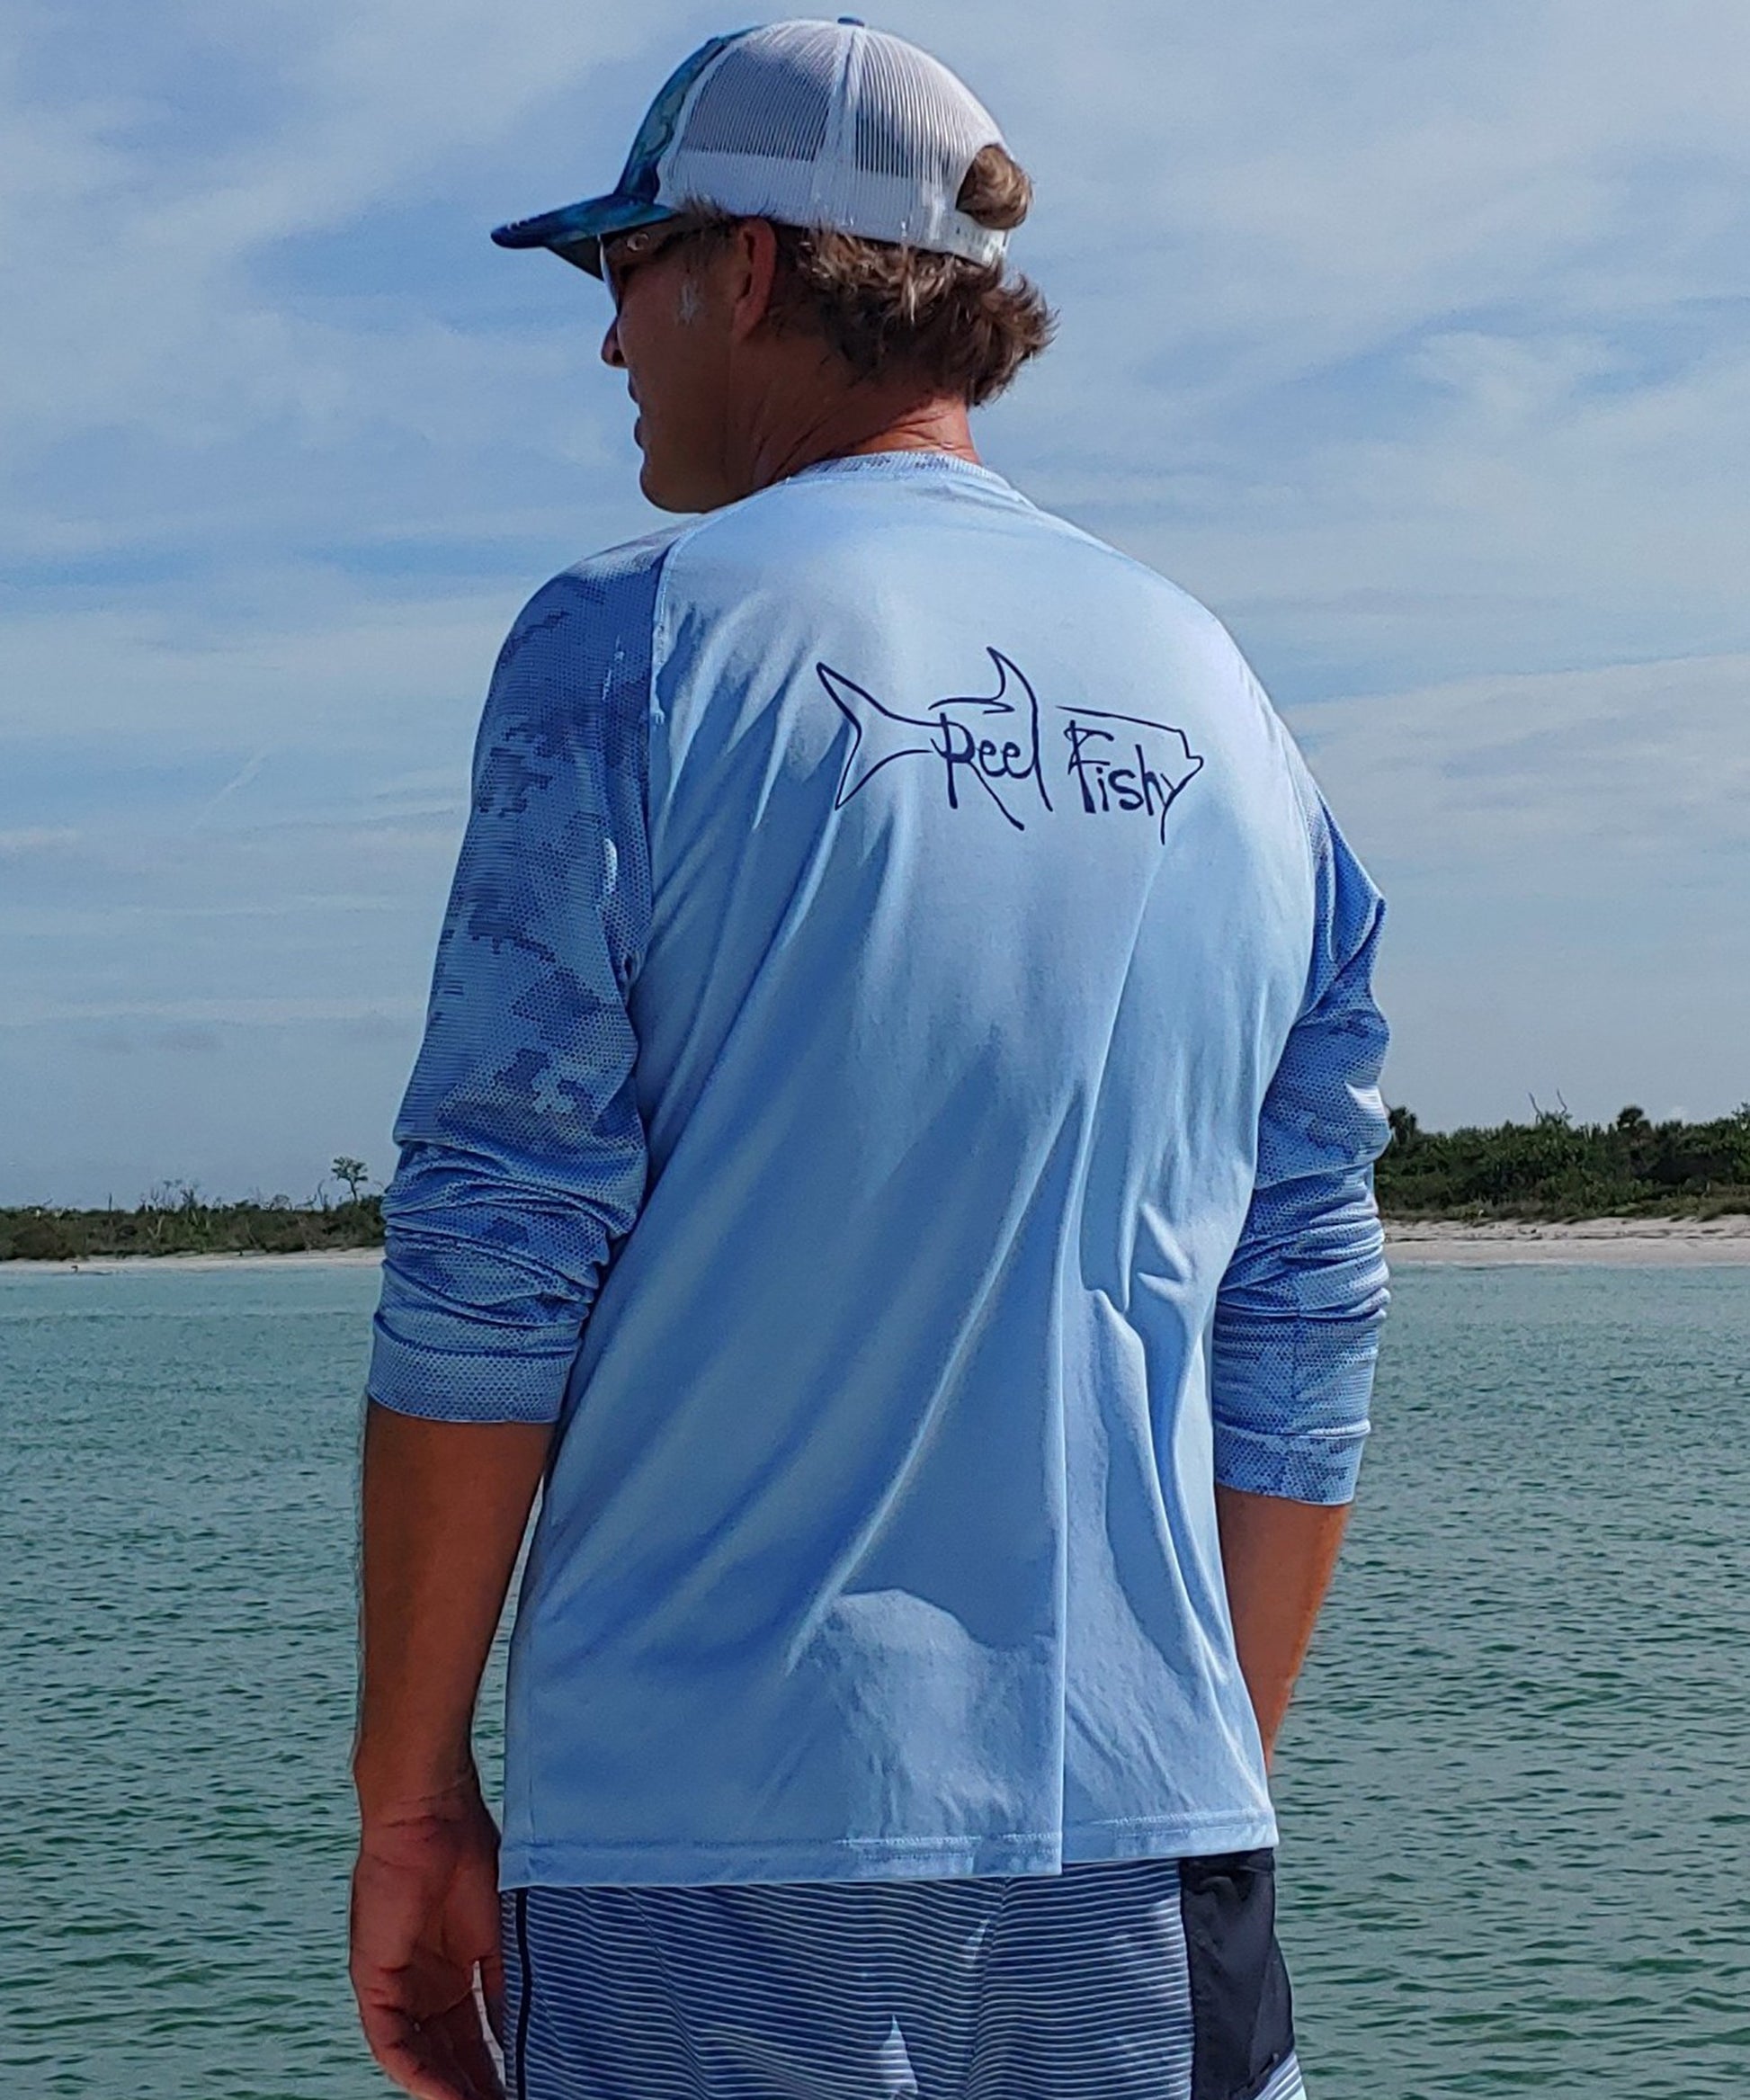 Tarpon Performance Digital Camo 50+uv Fishing Long Sleeve Shirts- Reel Fishy Apparel M / Lt. Gray Camo - unisex